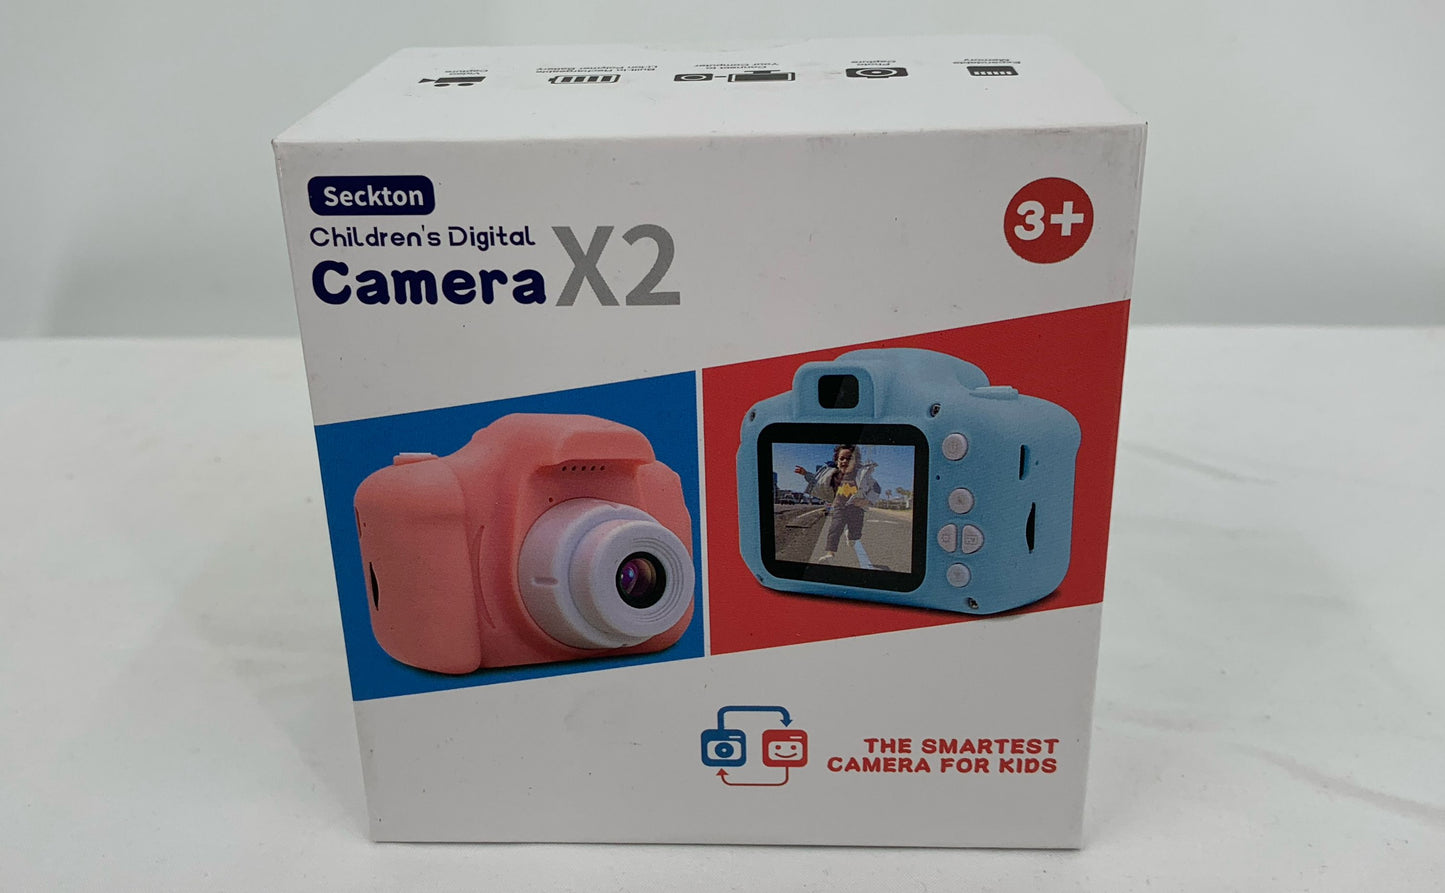 Seckton Children's Digital Camera X2 Li-Ion Polymer Battery Photo/Video Capture